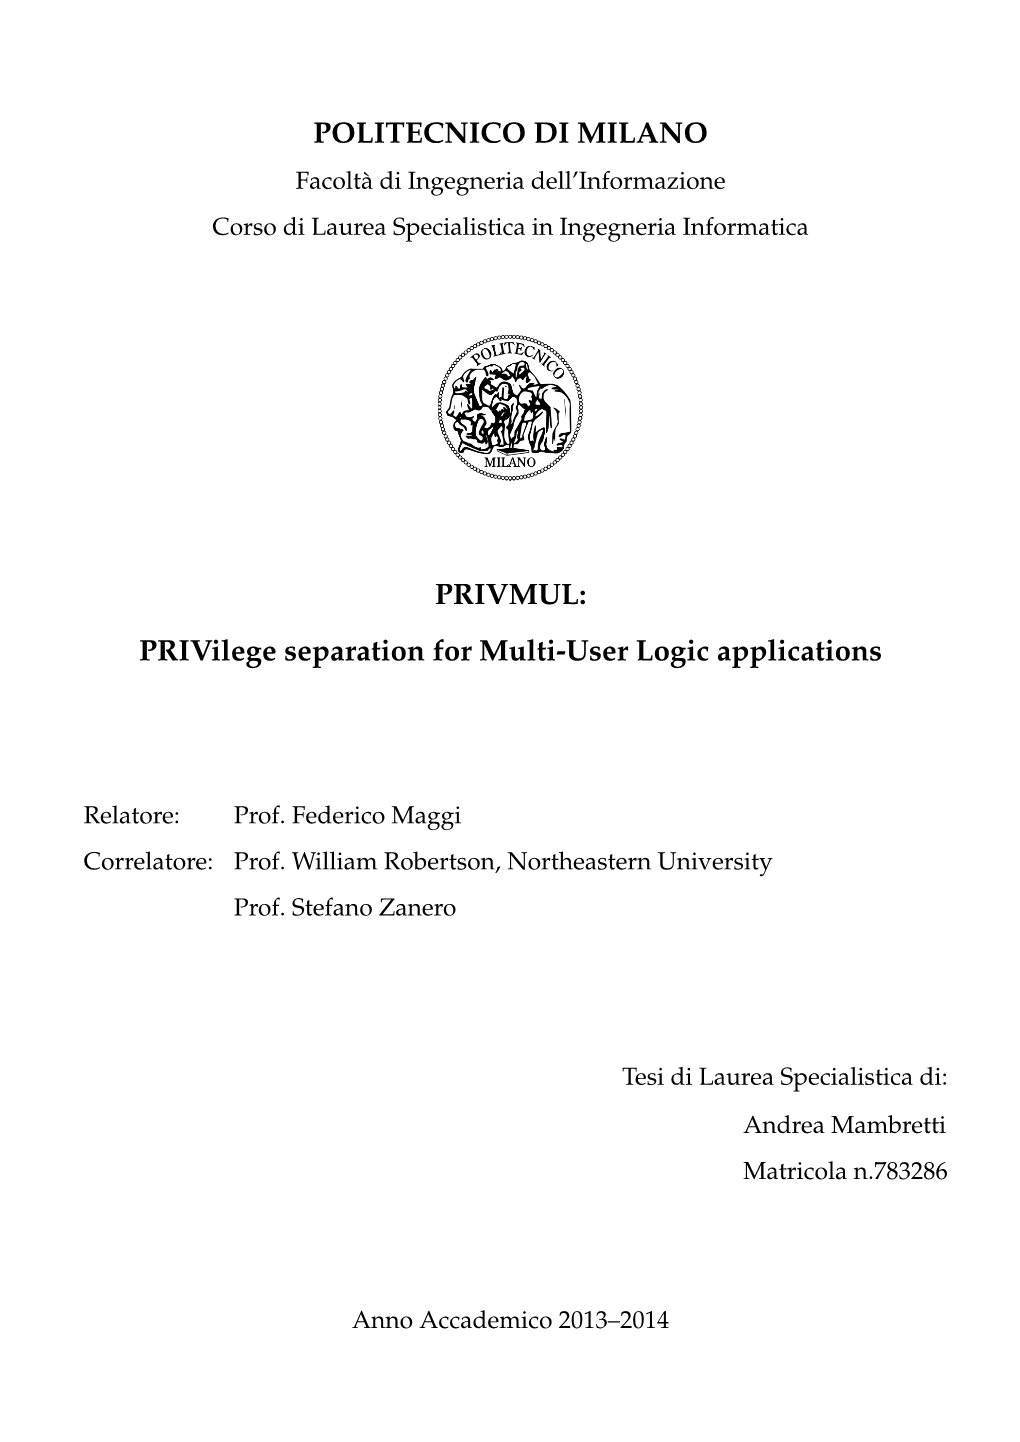 PRIVMUL: Privilege Separation for Multi-User Logic Applications